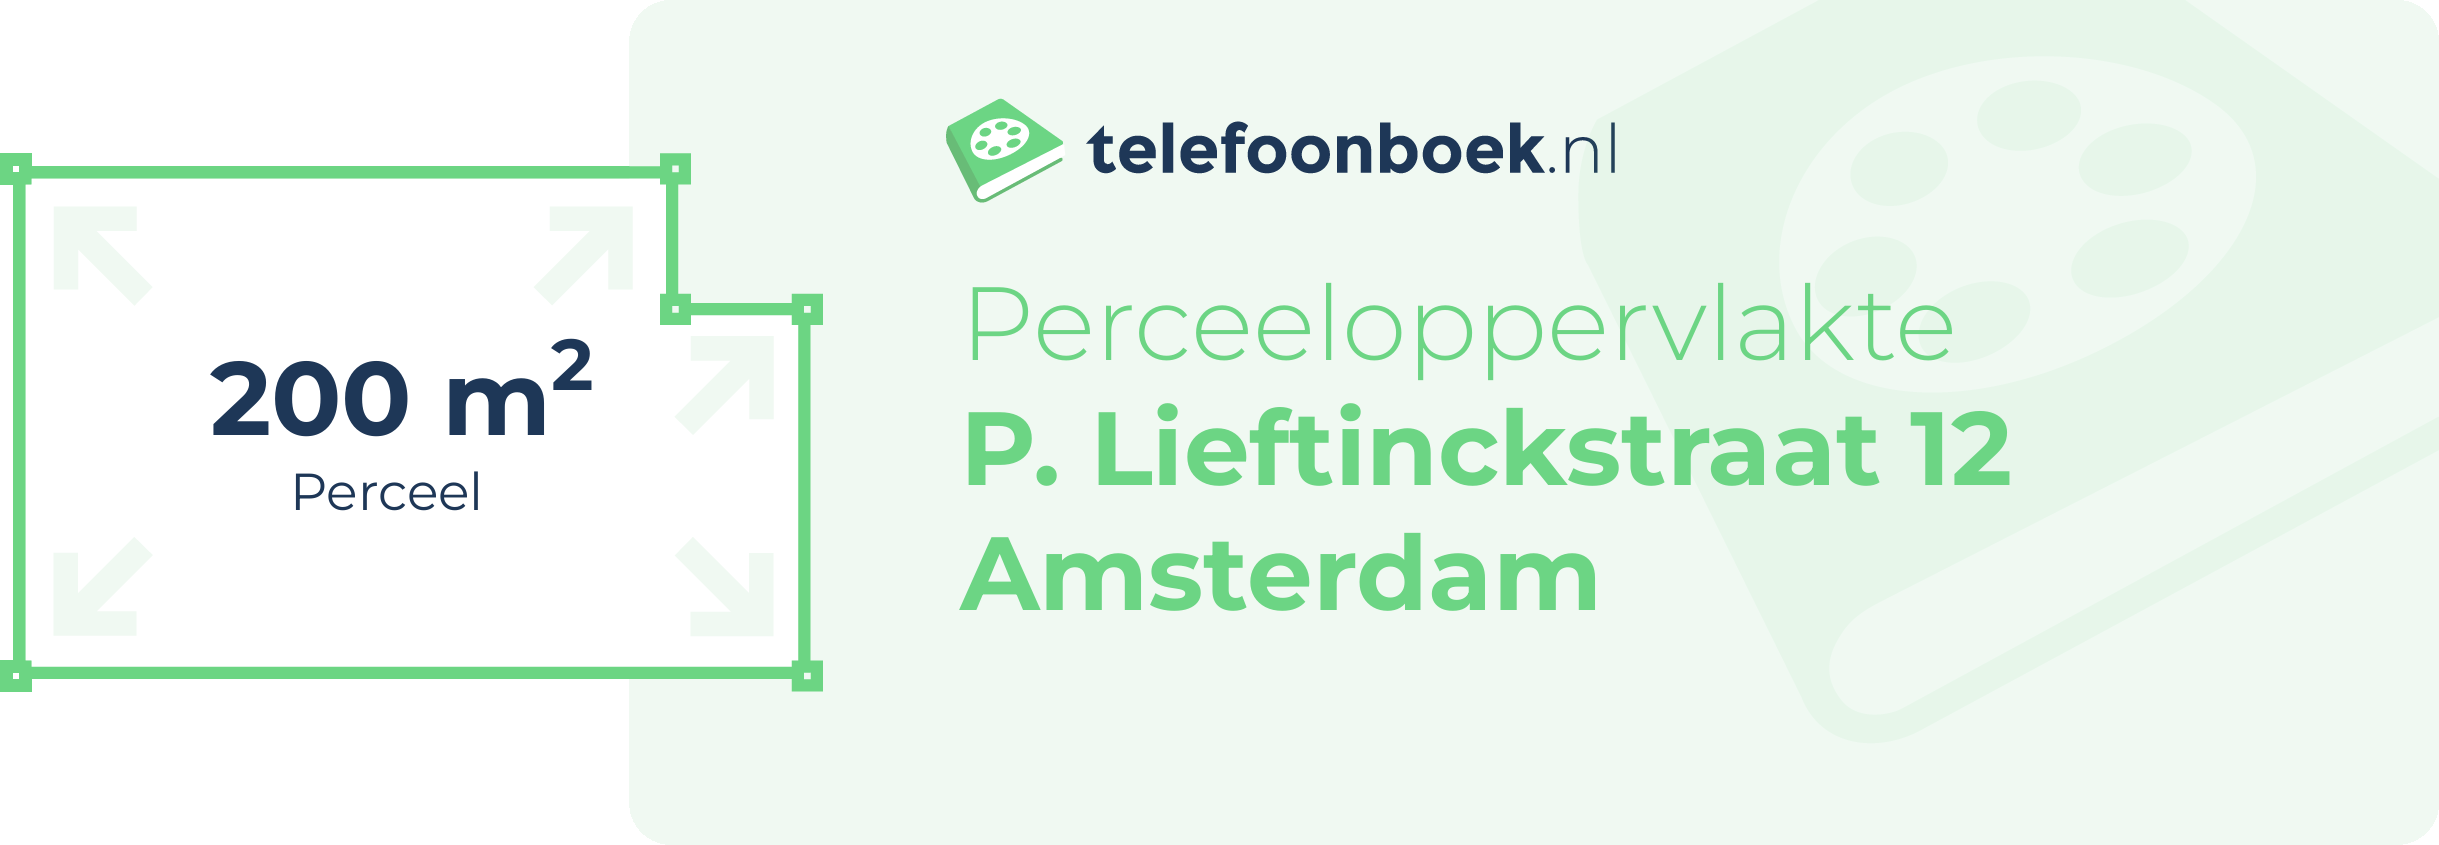 Perceeloppervlakte P. Lieftinckstraat 12 Amsterdam